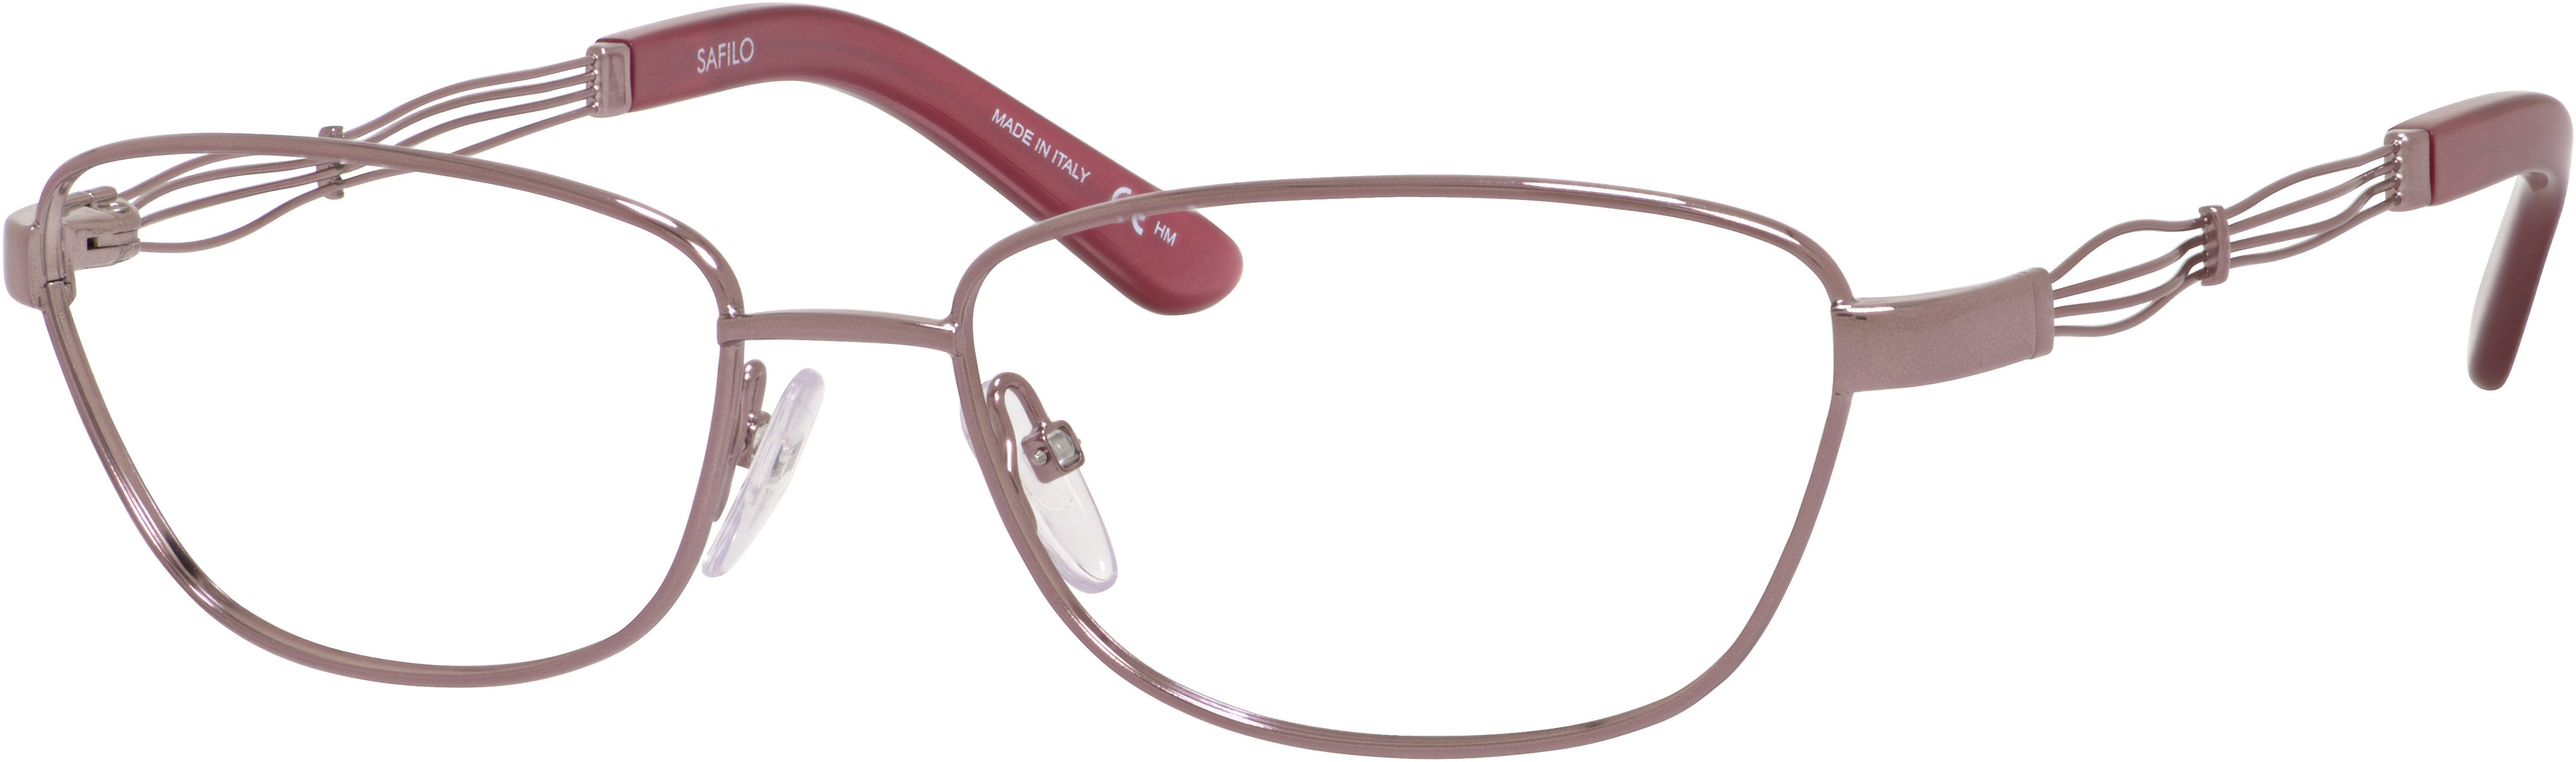  Emozioni 4372 Rectangular Eyeglasses 035J-035J  Pink (00 Demo Lens)